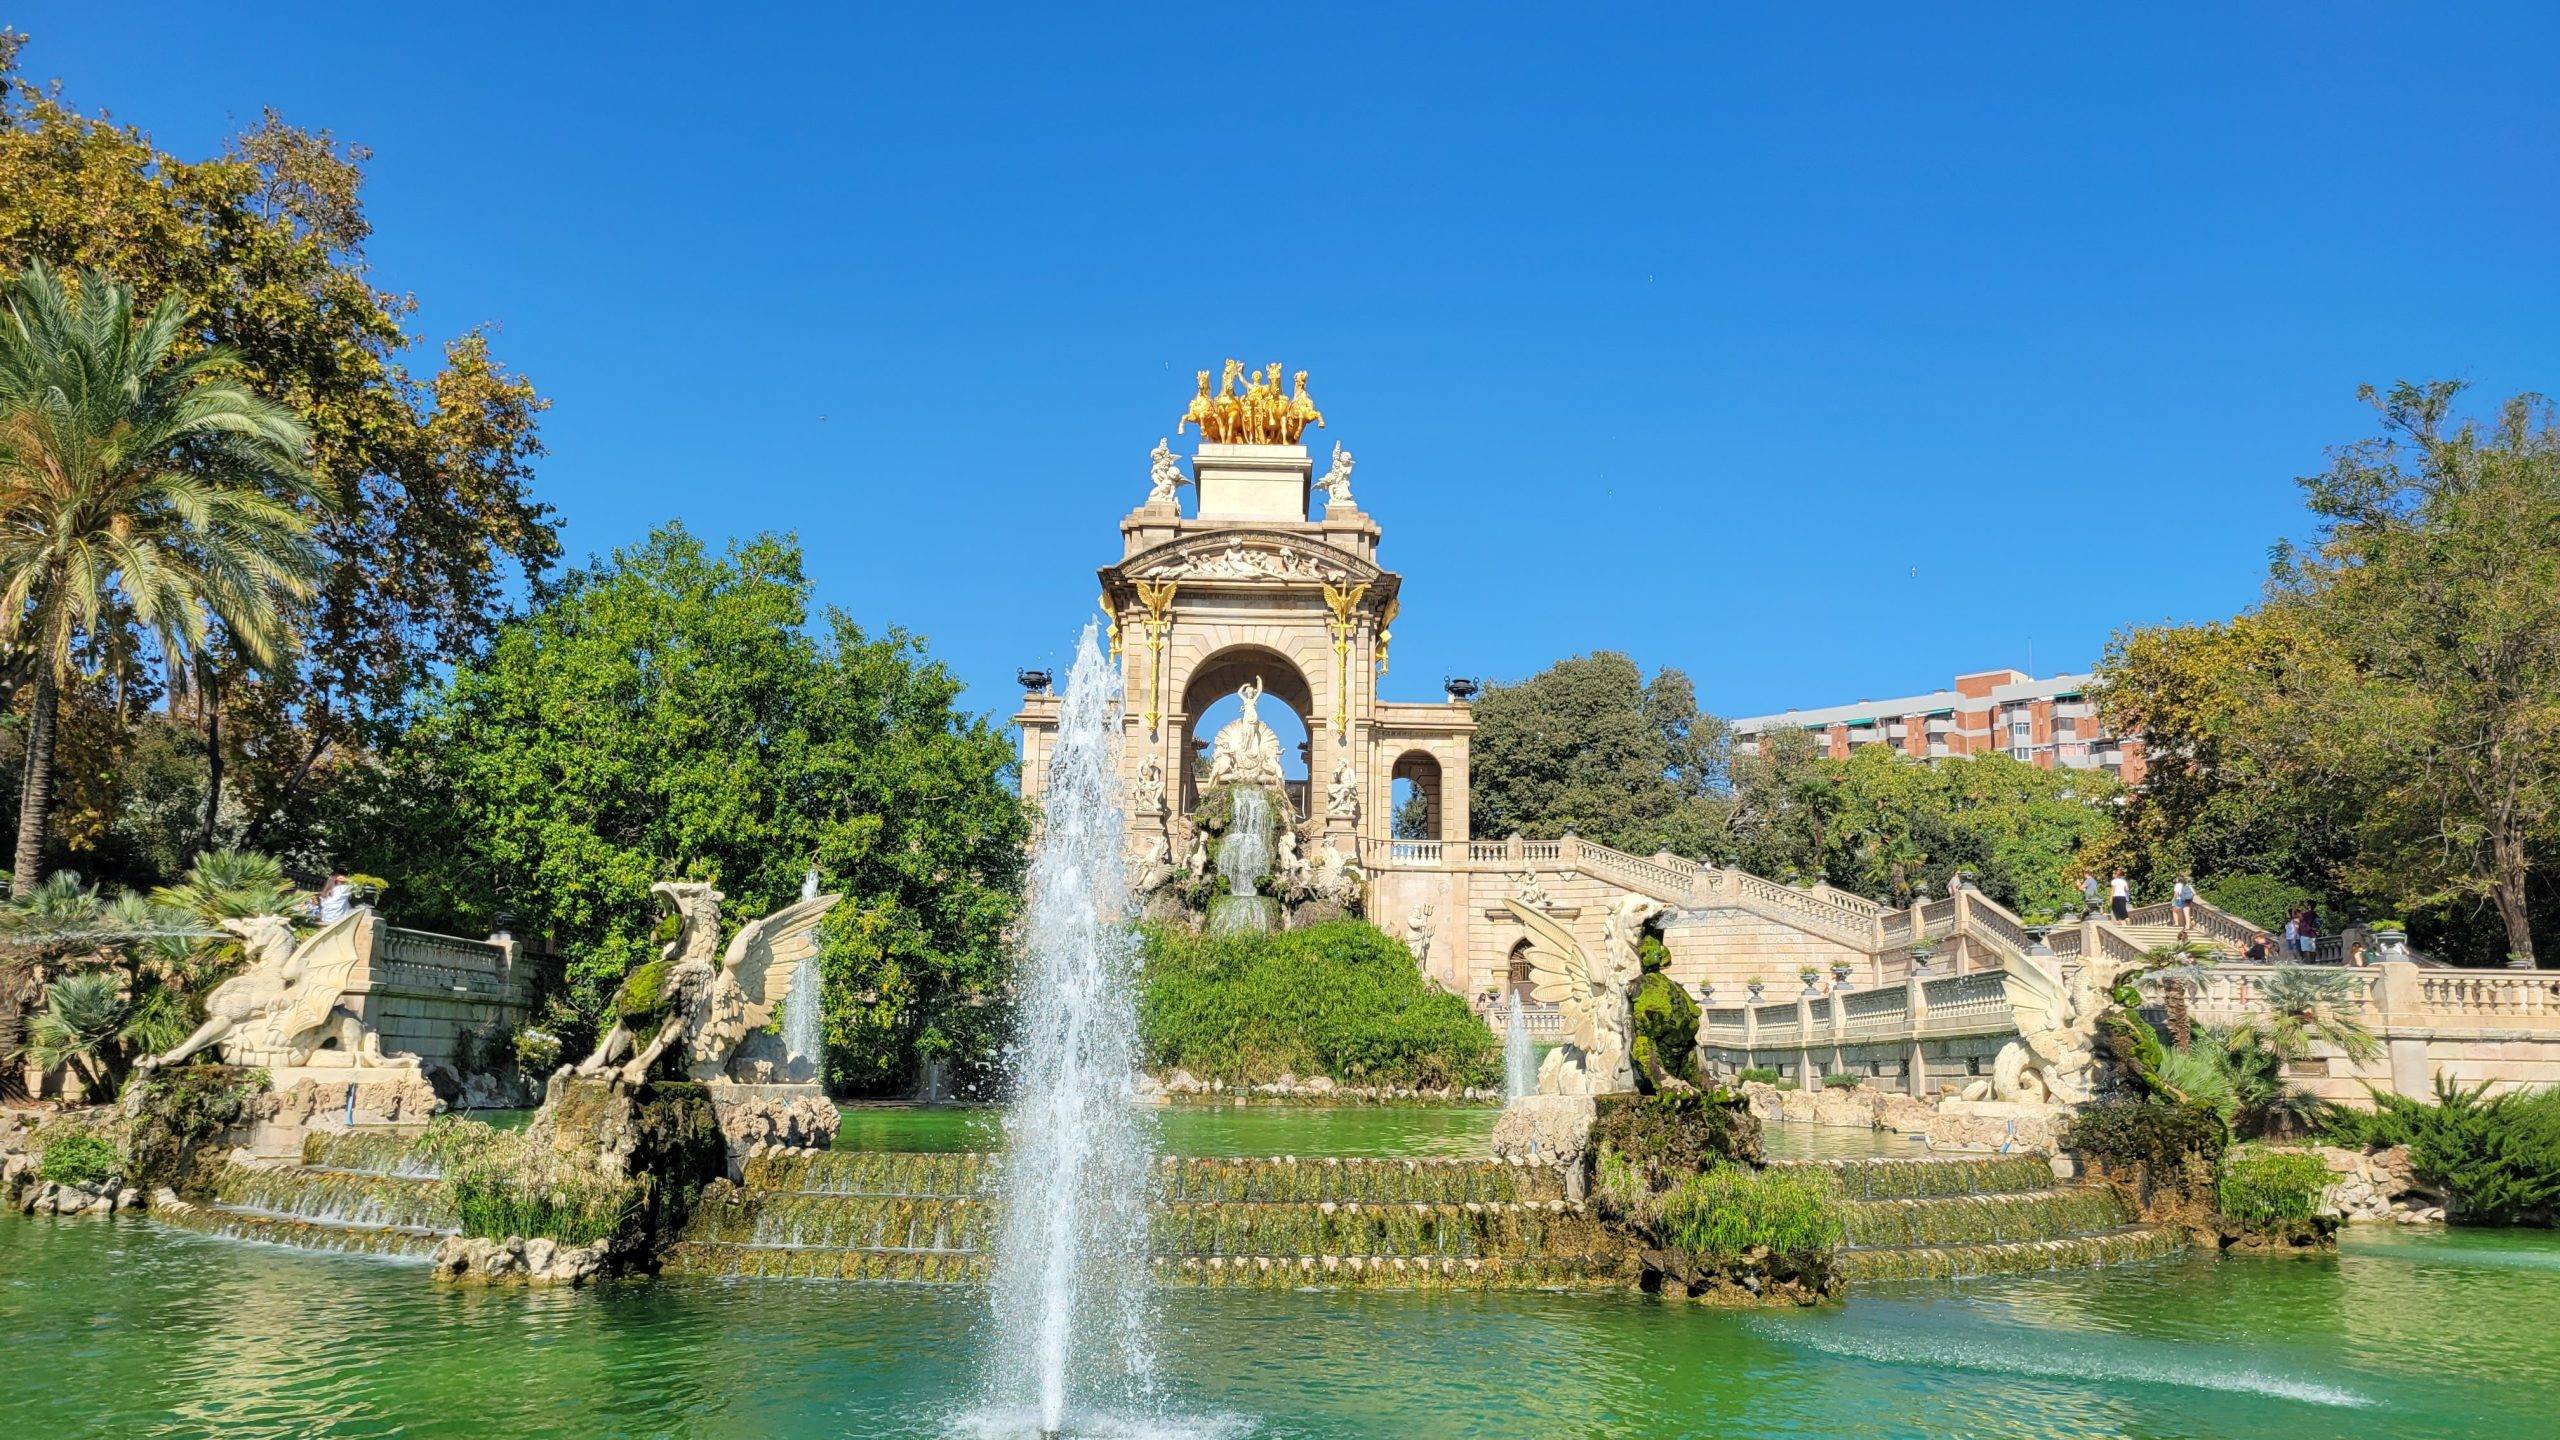 Fountain at Park Ciutadella